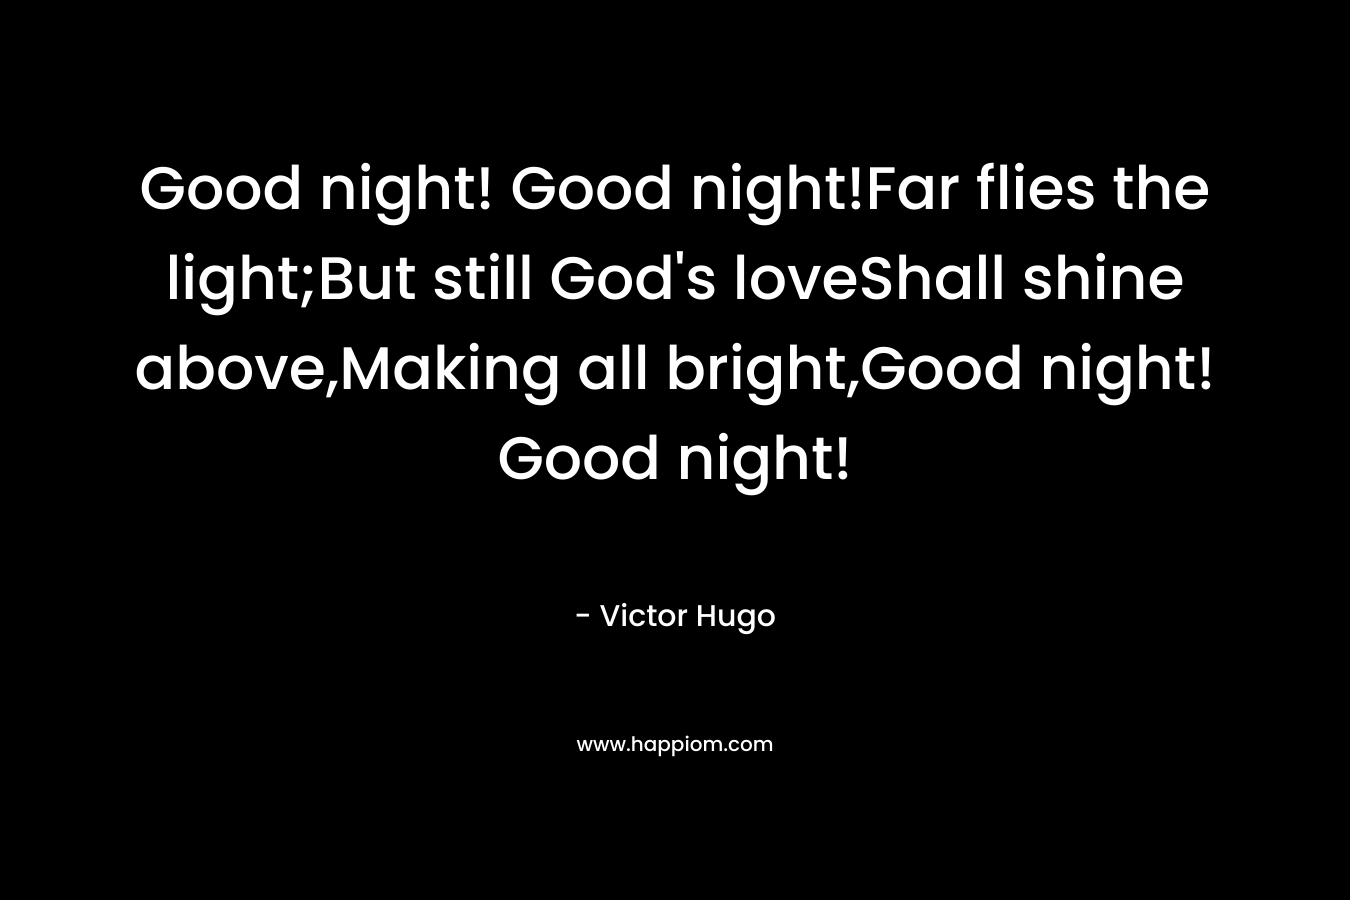 Good night! Good night!Far flies the light;But still God's loveShall shine above,Making all bright,Good night! Good night!